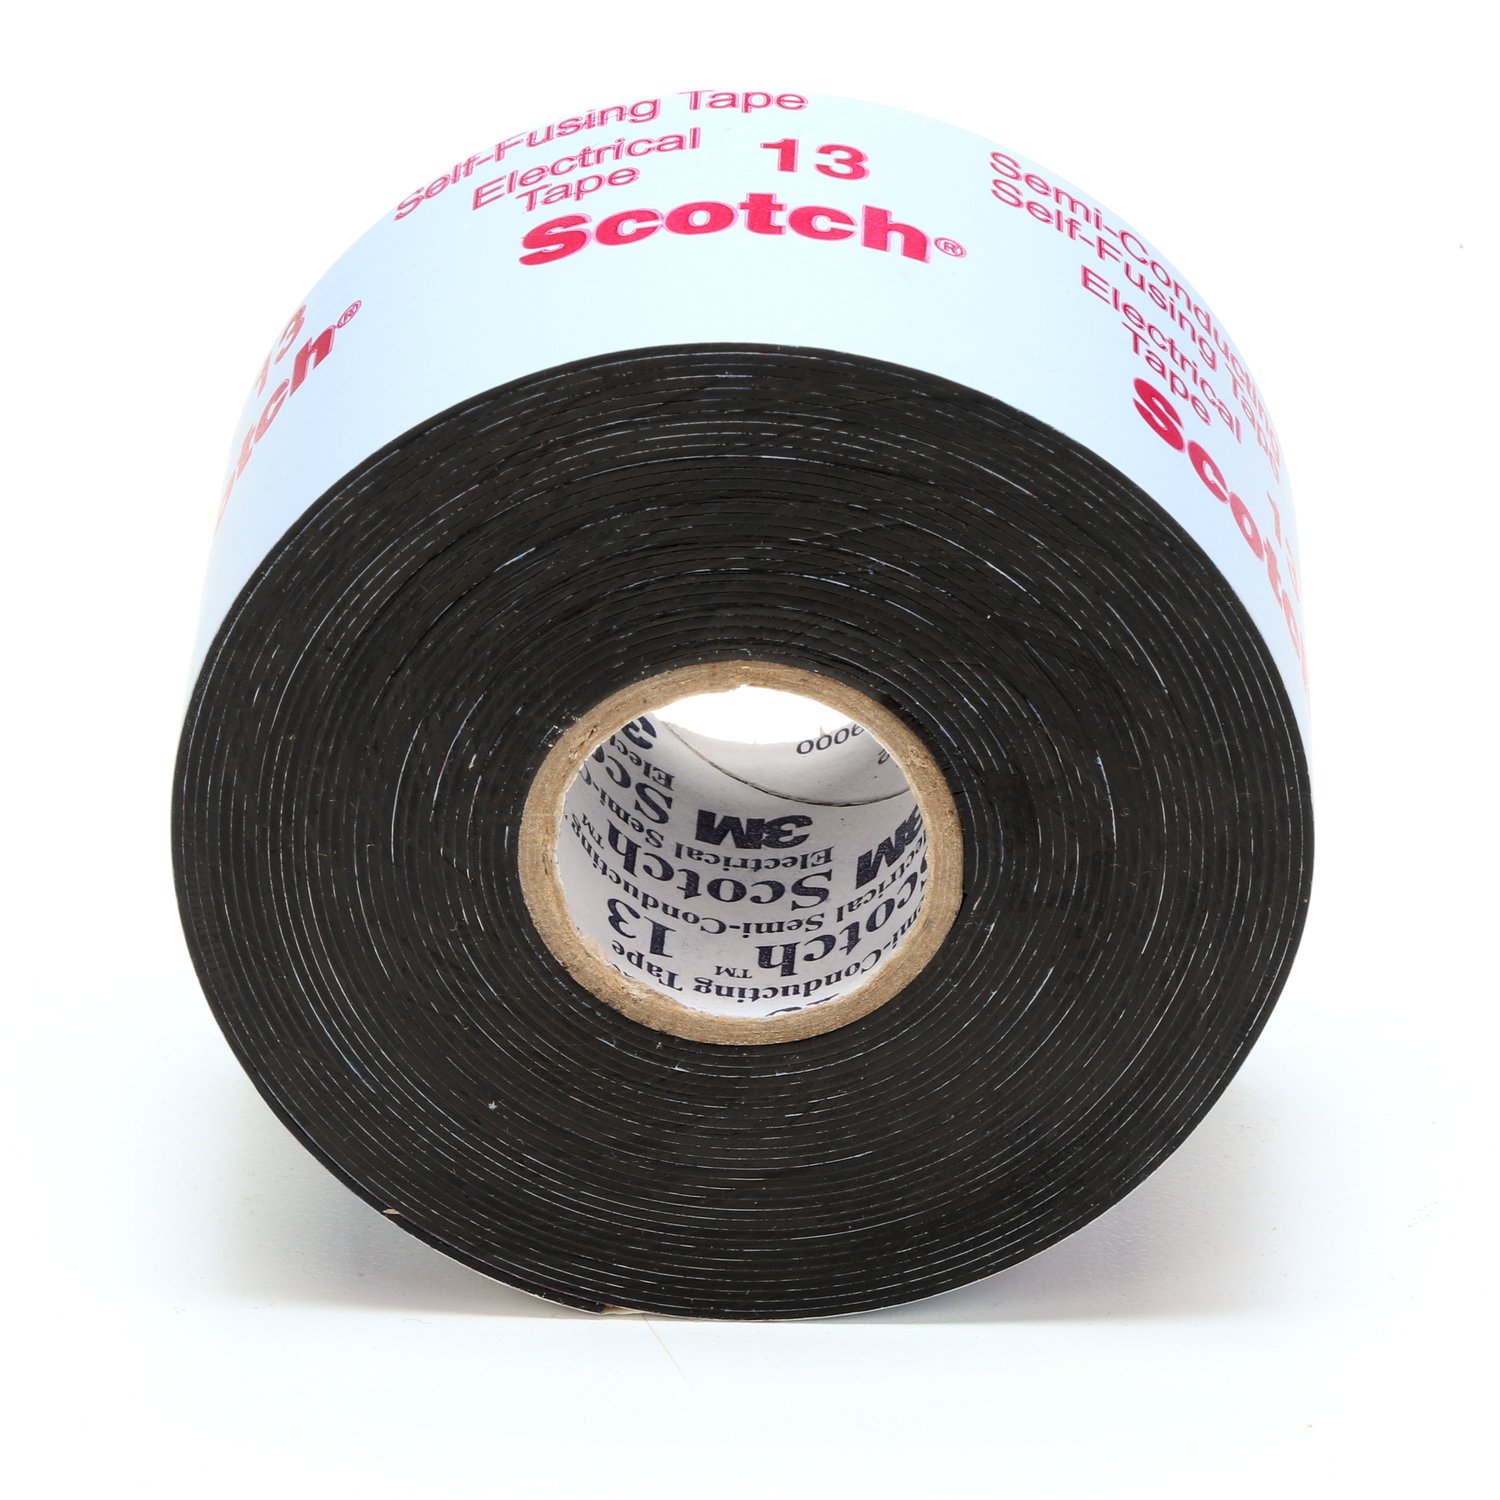 7100139127 - Scotch Electrical Semi-Conducting Tape 13, 1-1/2 in x 15 ft, Printed,
Black, 1 roll/carton, 45 rolls/Case